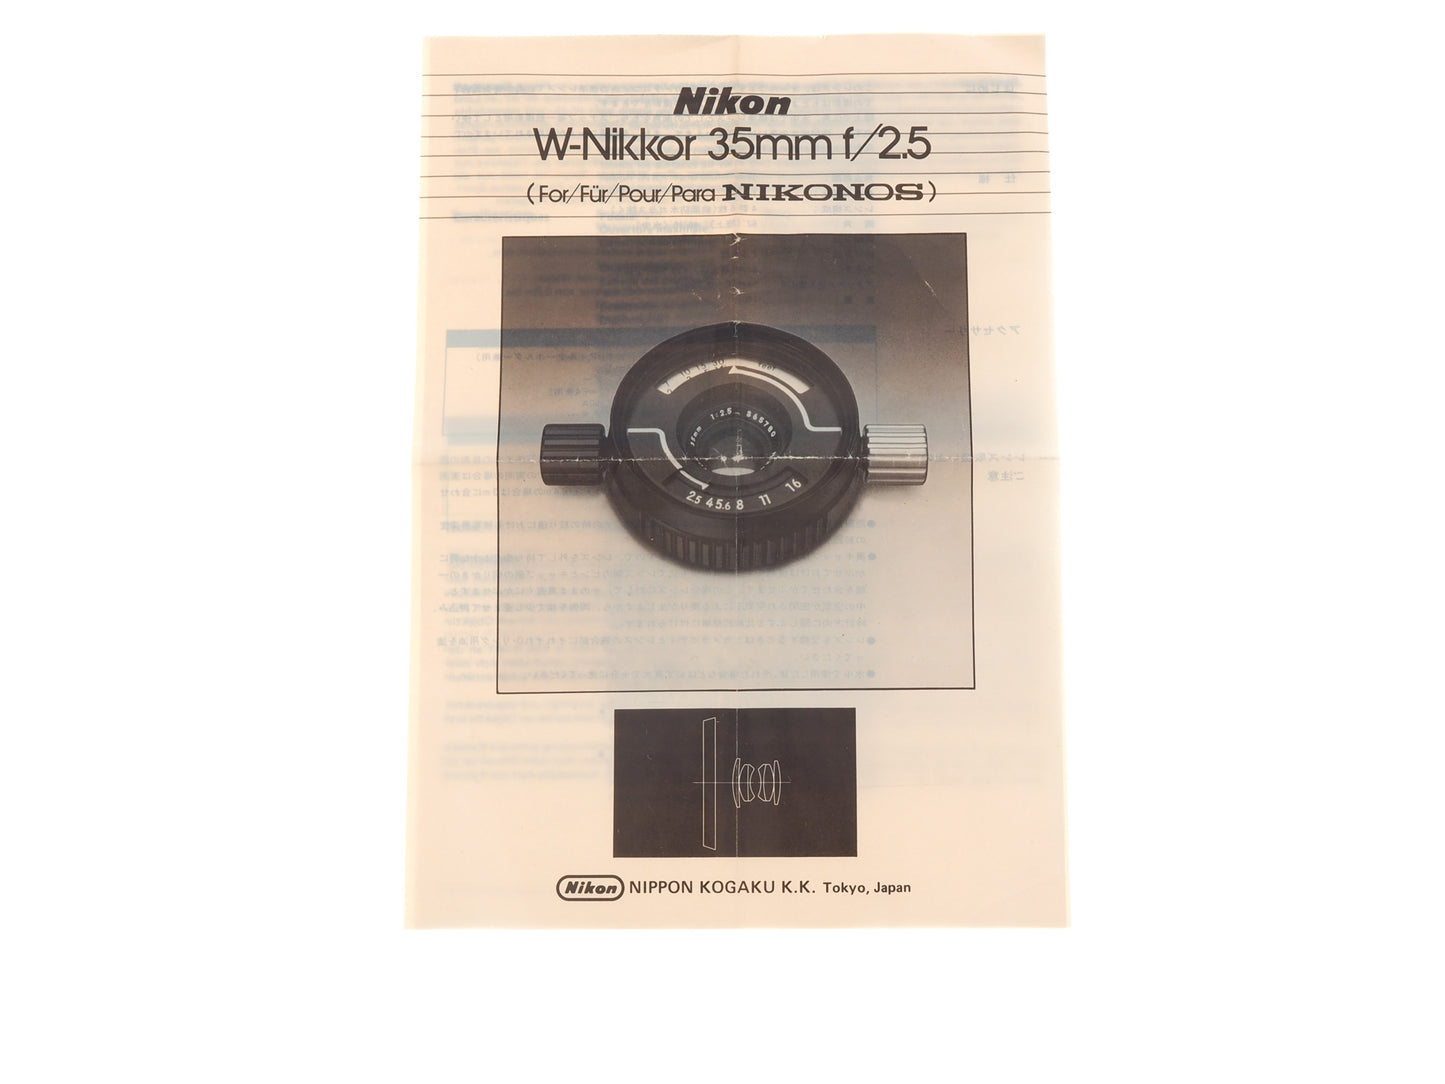 Nikon W-Nikkor 35mm f/2.5 Instructions - Accessory